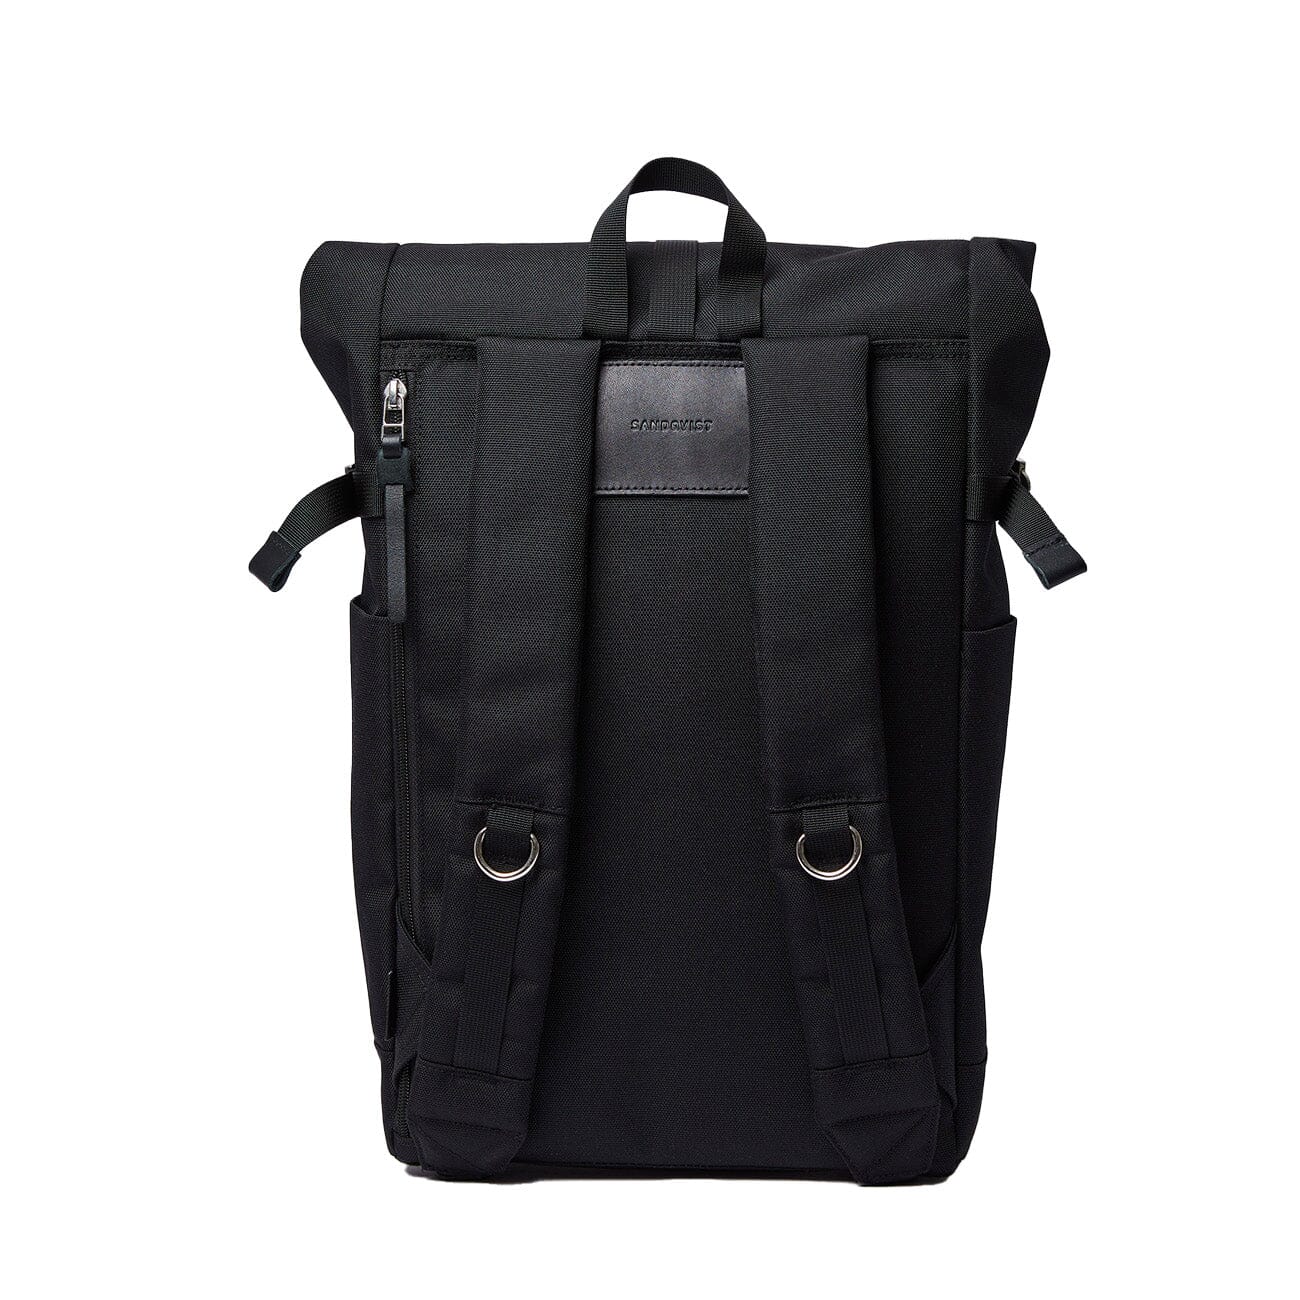 eco friendly urban roll top backpack ilon sandqvist black color back view